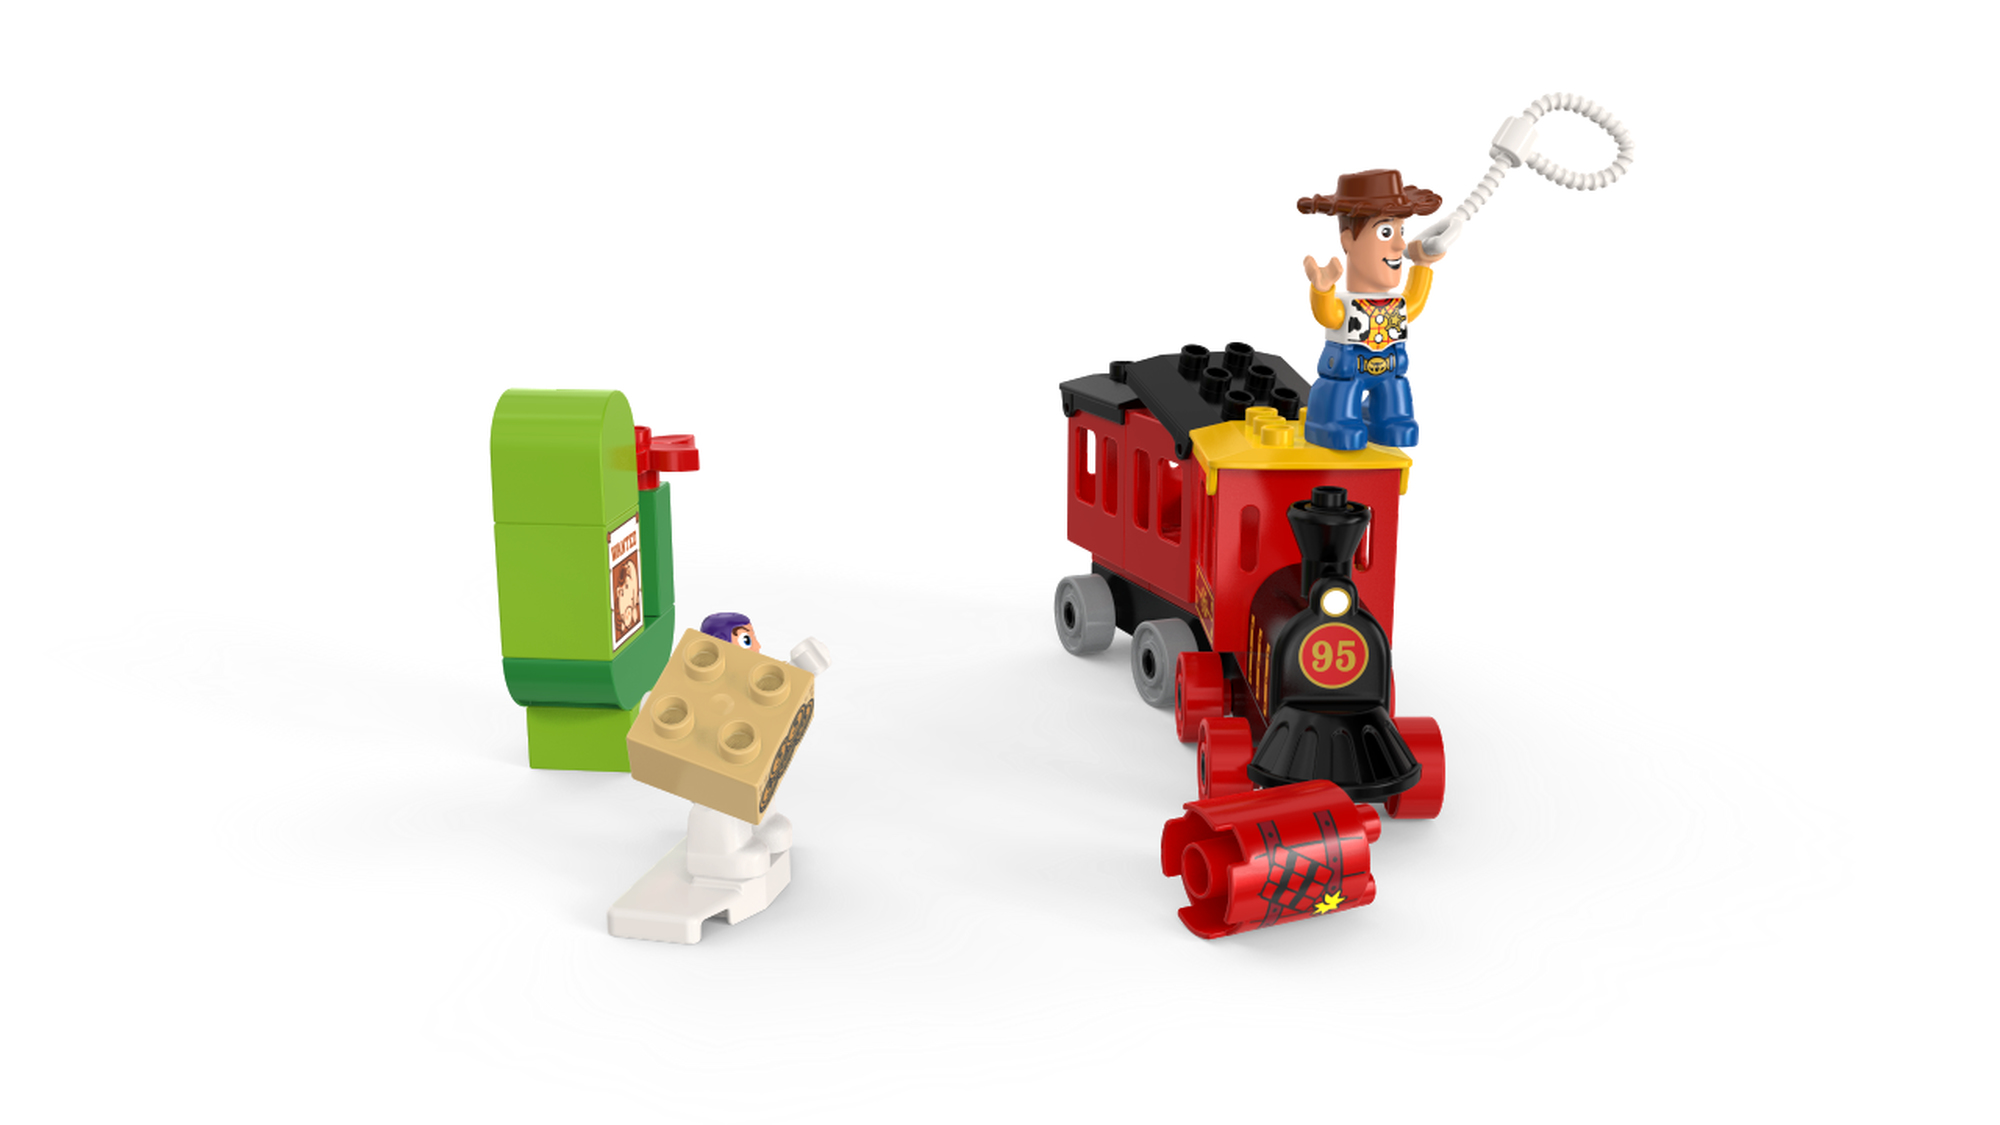 LEGO Duplo Disney Pixar Toy Story Train Set 10894